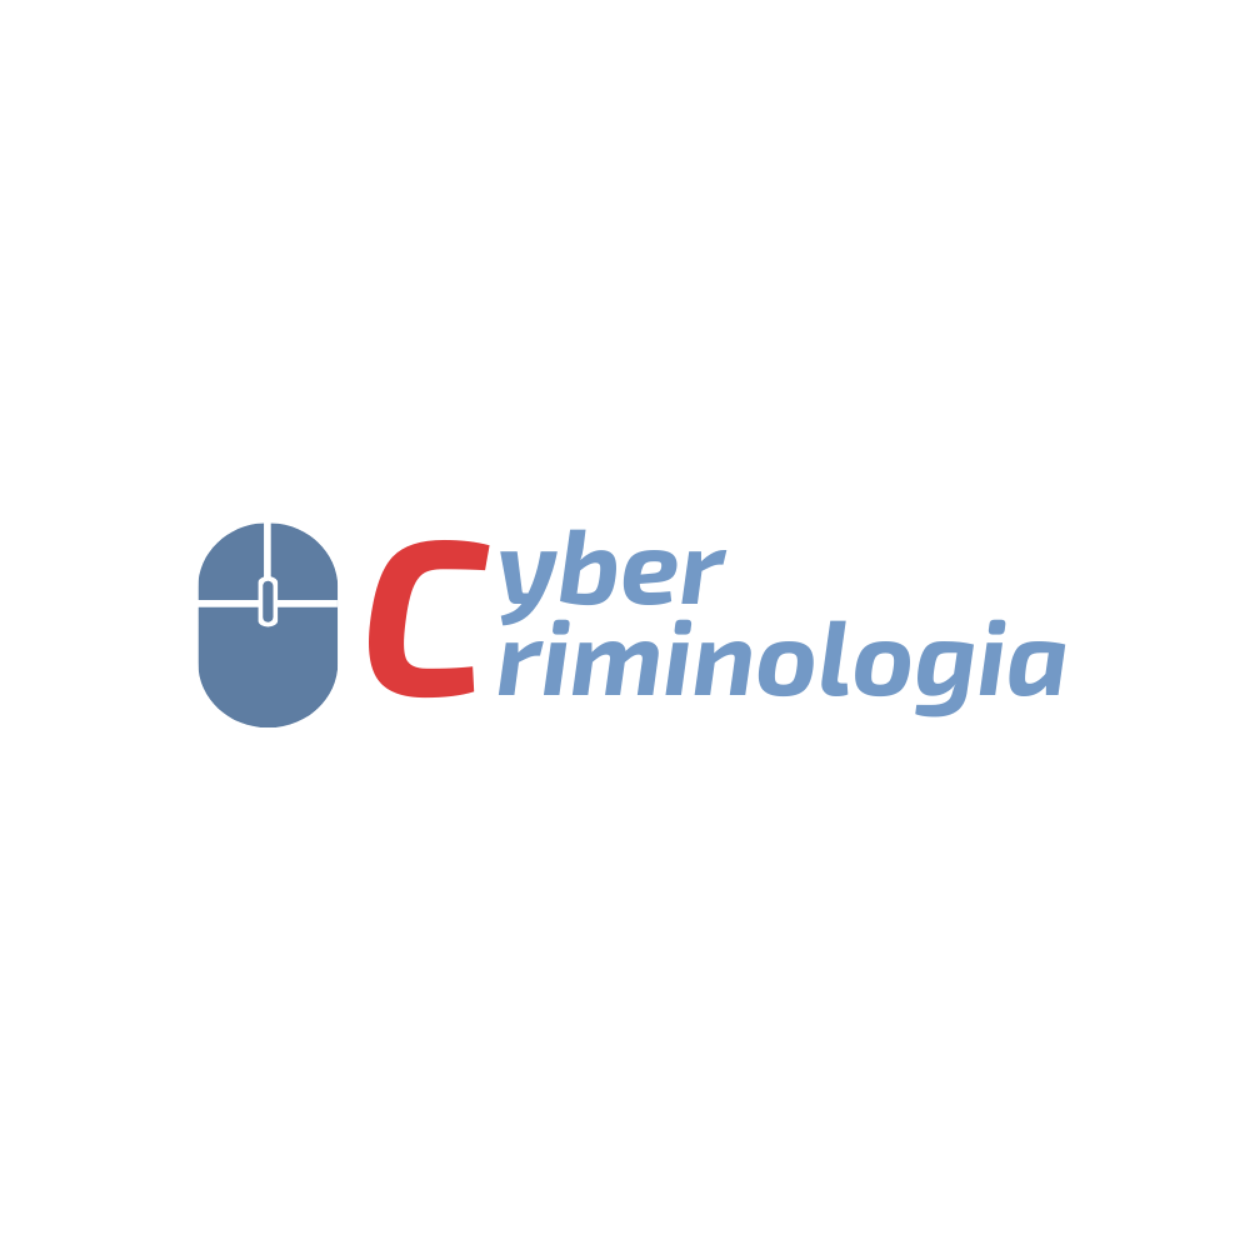 Master online Cyber Criminologia | ID S.O.F.I.A.: 45153